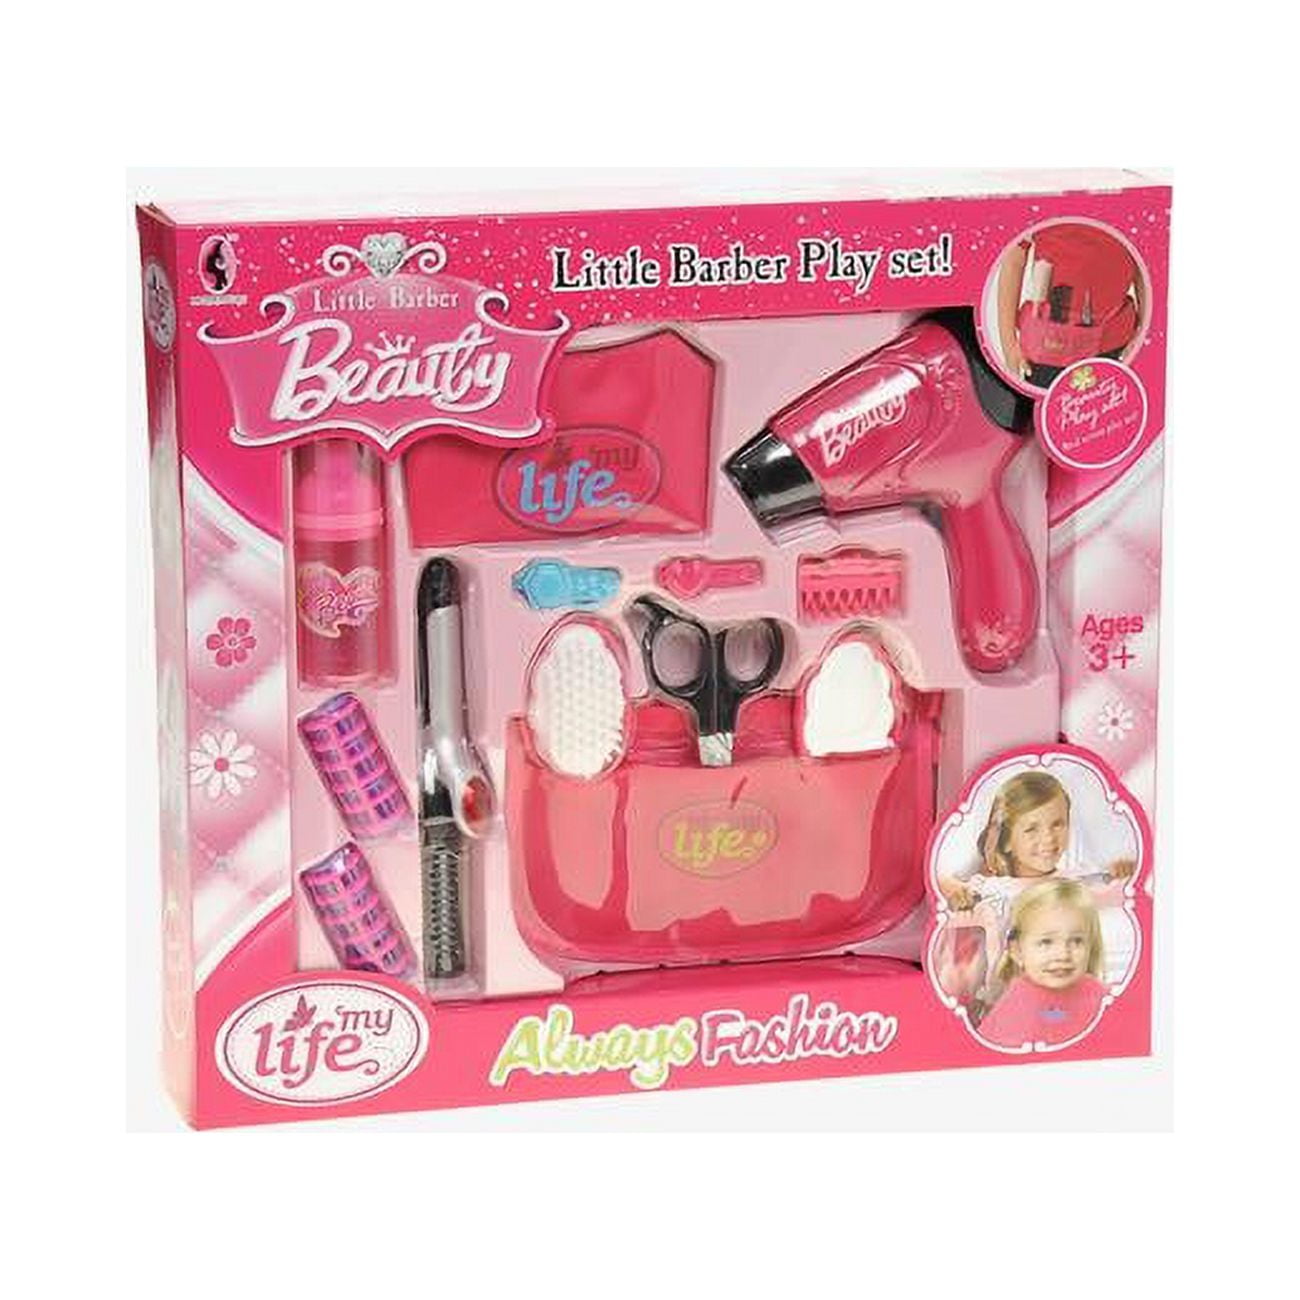 Ps00b Beauty Salon Fashion Toy Set With Hair Dryer Curling Iron Mirror Scissor Hair Brush Pretend Play Set